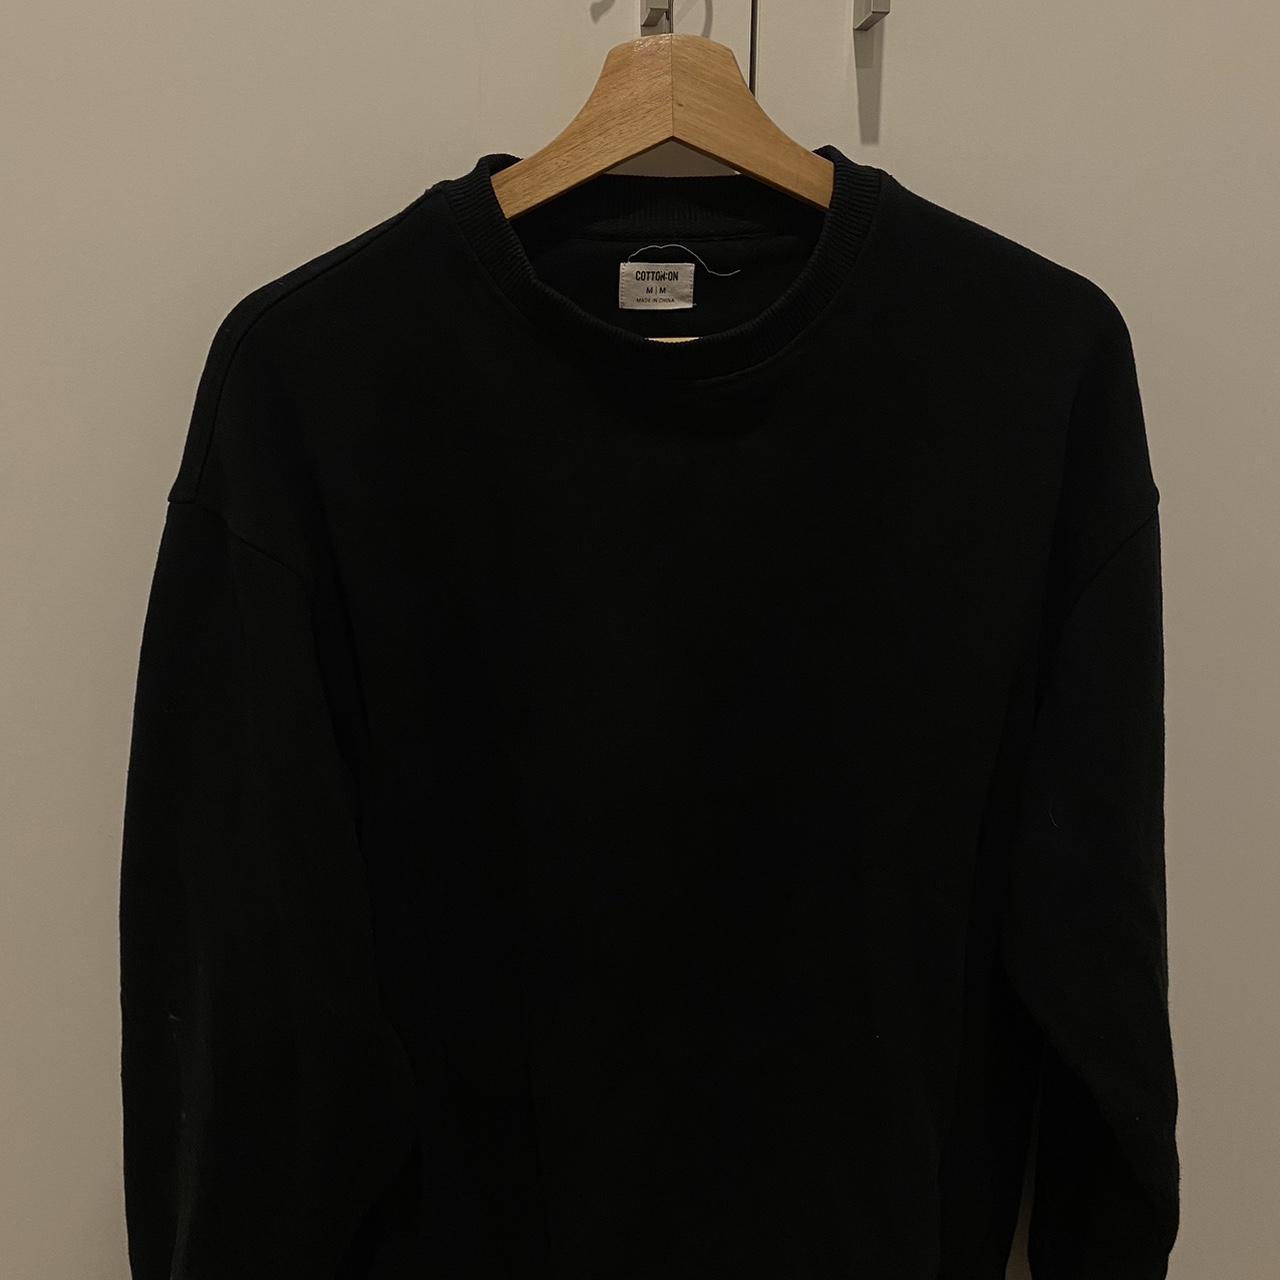 Black sweater crew neck (worn once) - Depop